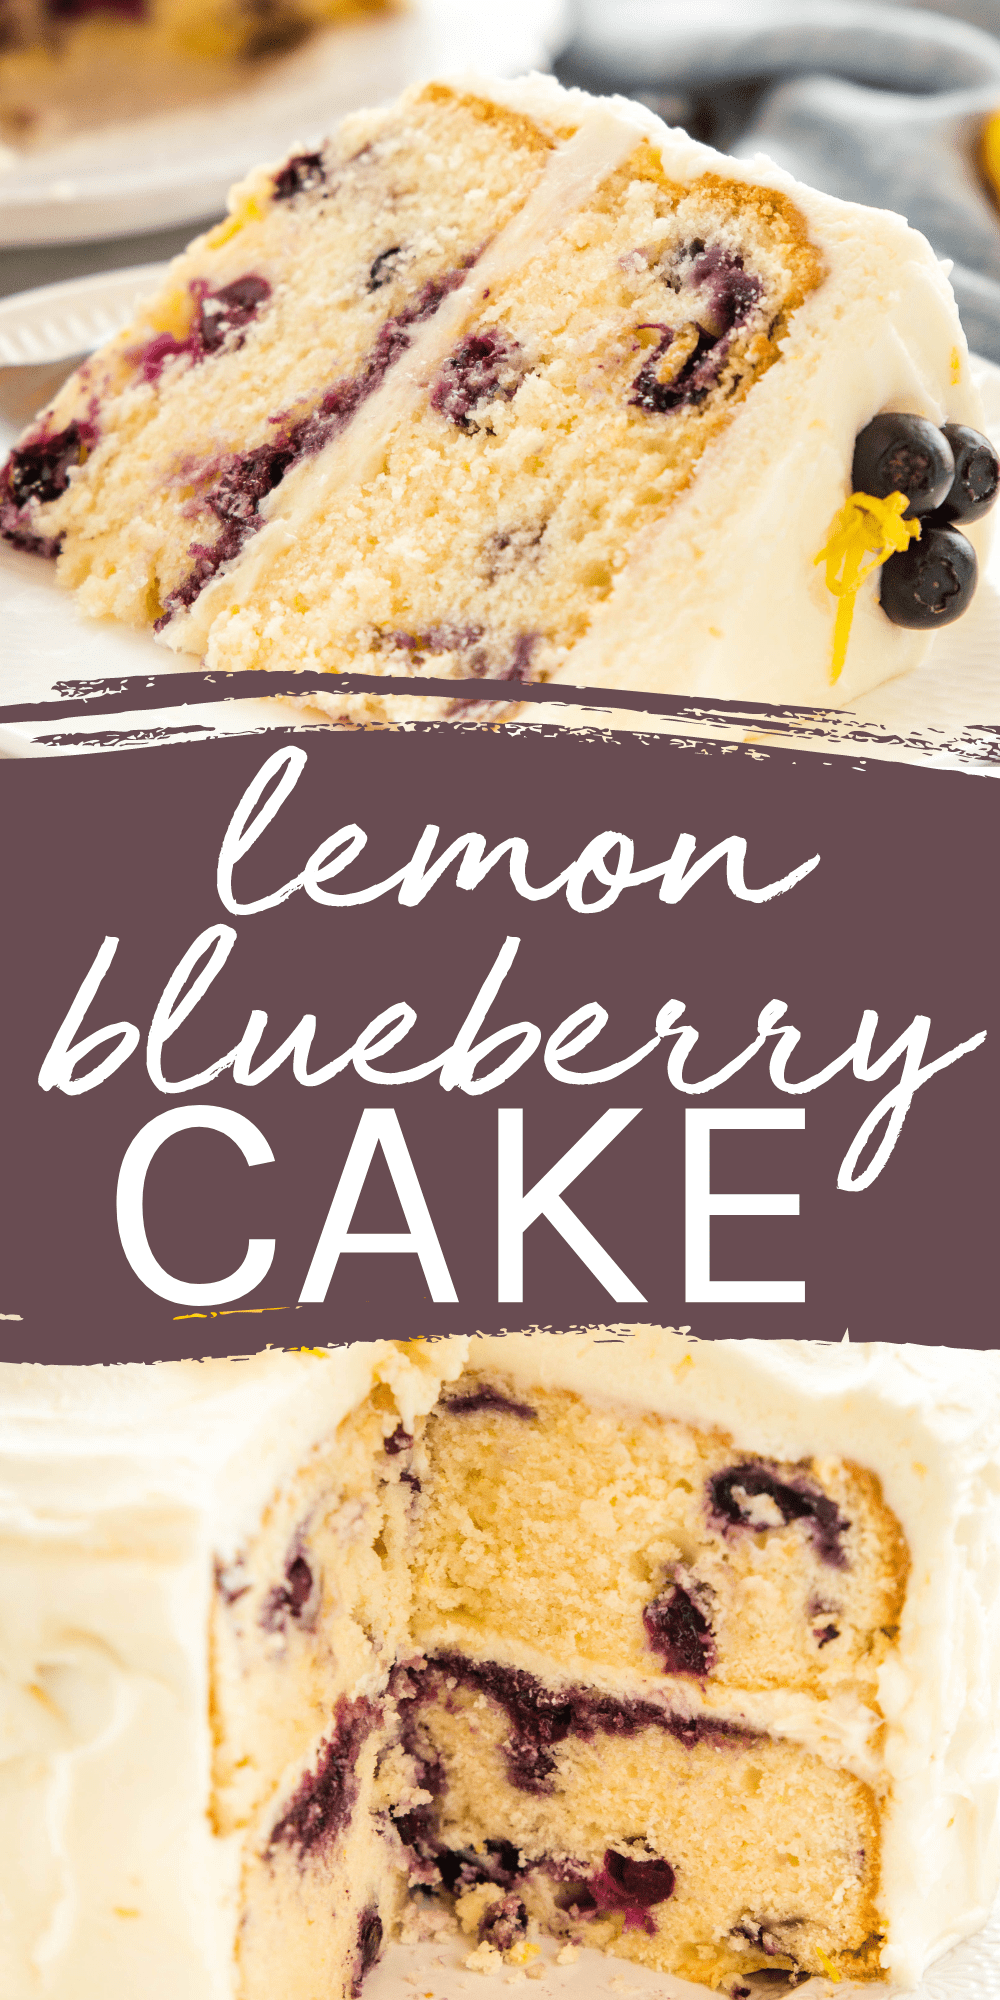 This Lemon Blueberry Cake recipe is the perfect simple dessert for spring or summer! A moist and fluffy lemon cake made with fresh blueberries and a creamy lemon buttercream frosting. Recipe from thebusybaker.ca! #lemonblueberrycake #lemoncake #blueberrycake #summercake #caketips #protips #cakebakingtips #bakingtips #caketutorial via @busybakerblog